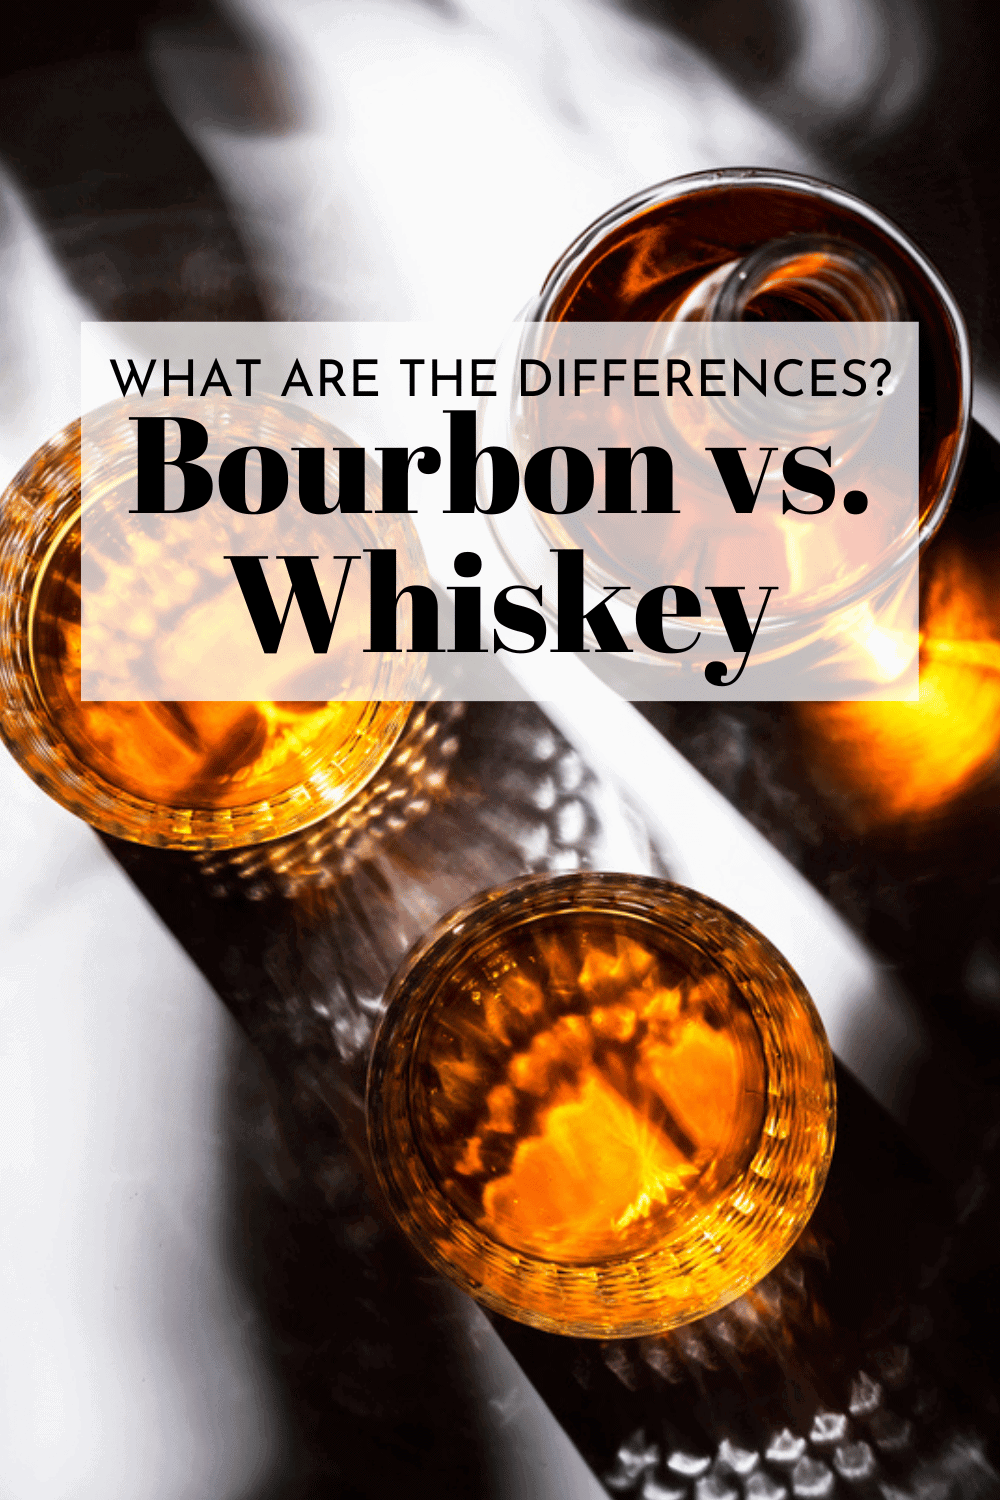 Glasses of dark liquor with text overlay - bourbon vs. whiskey.